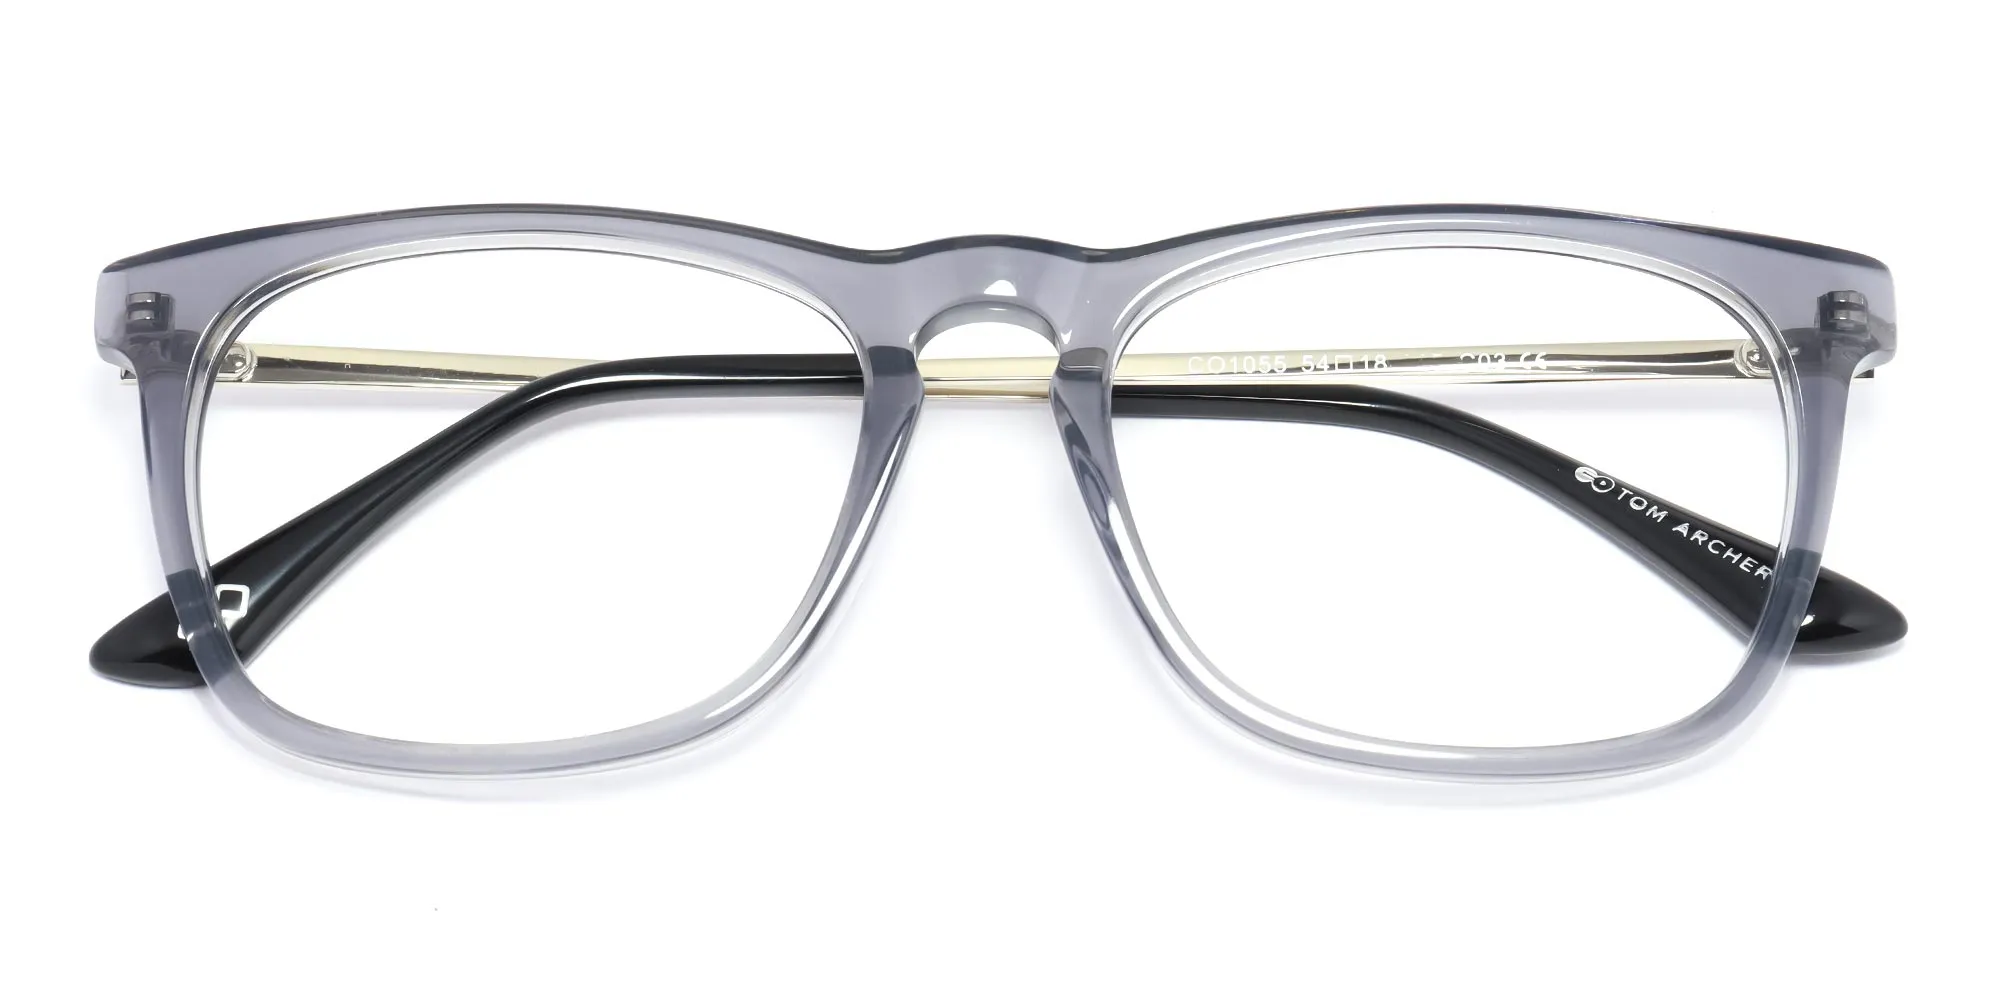 grey and black glasses frames -2